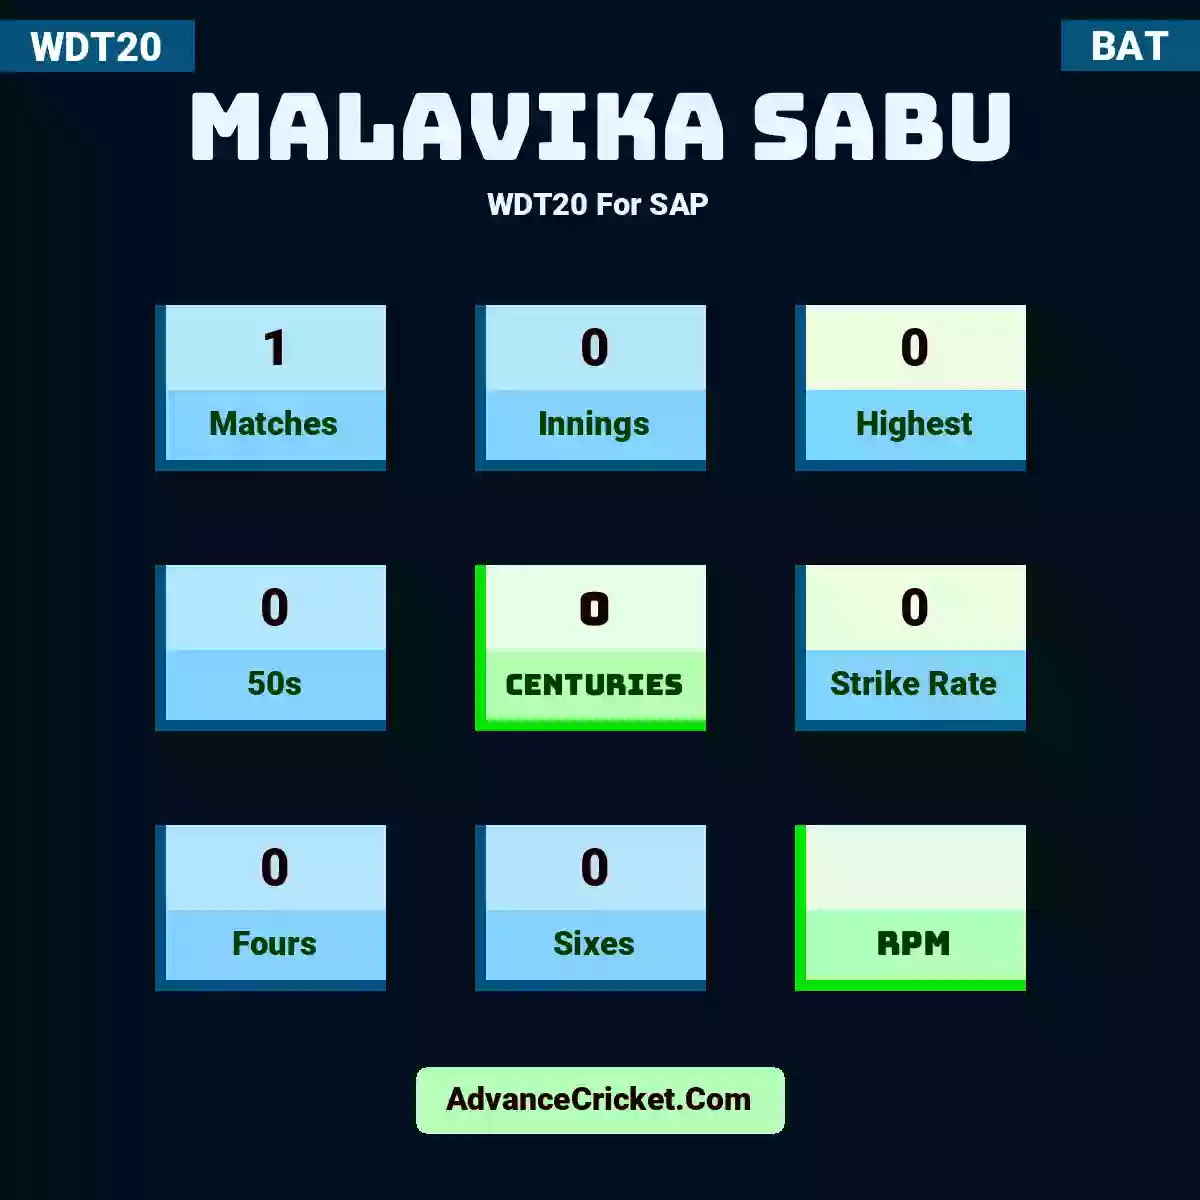 Malavika Sabu WDT20  For SAP, Malavika Sabu played 1 matches, scored 0 runs as highest, 0 half-centuries, and 0 centuries, with a strike rate of 0. M.Sabu hit 0 fours and 0 sixes.